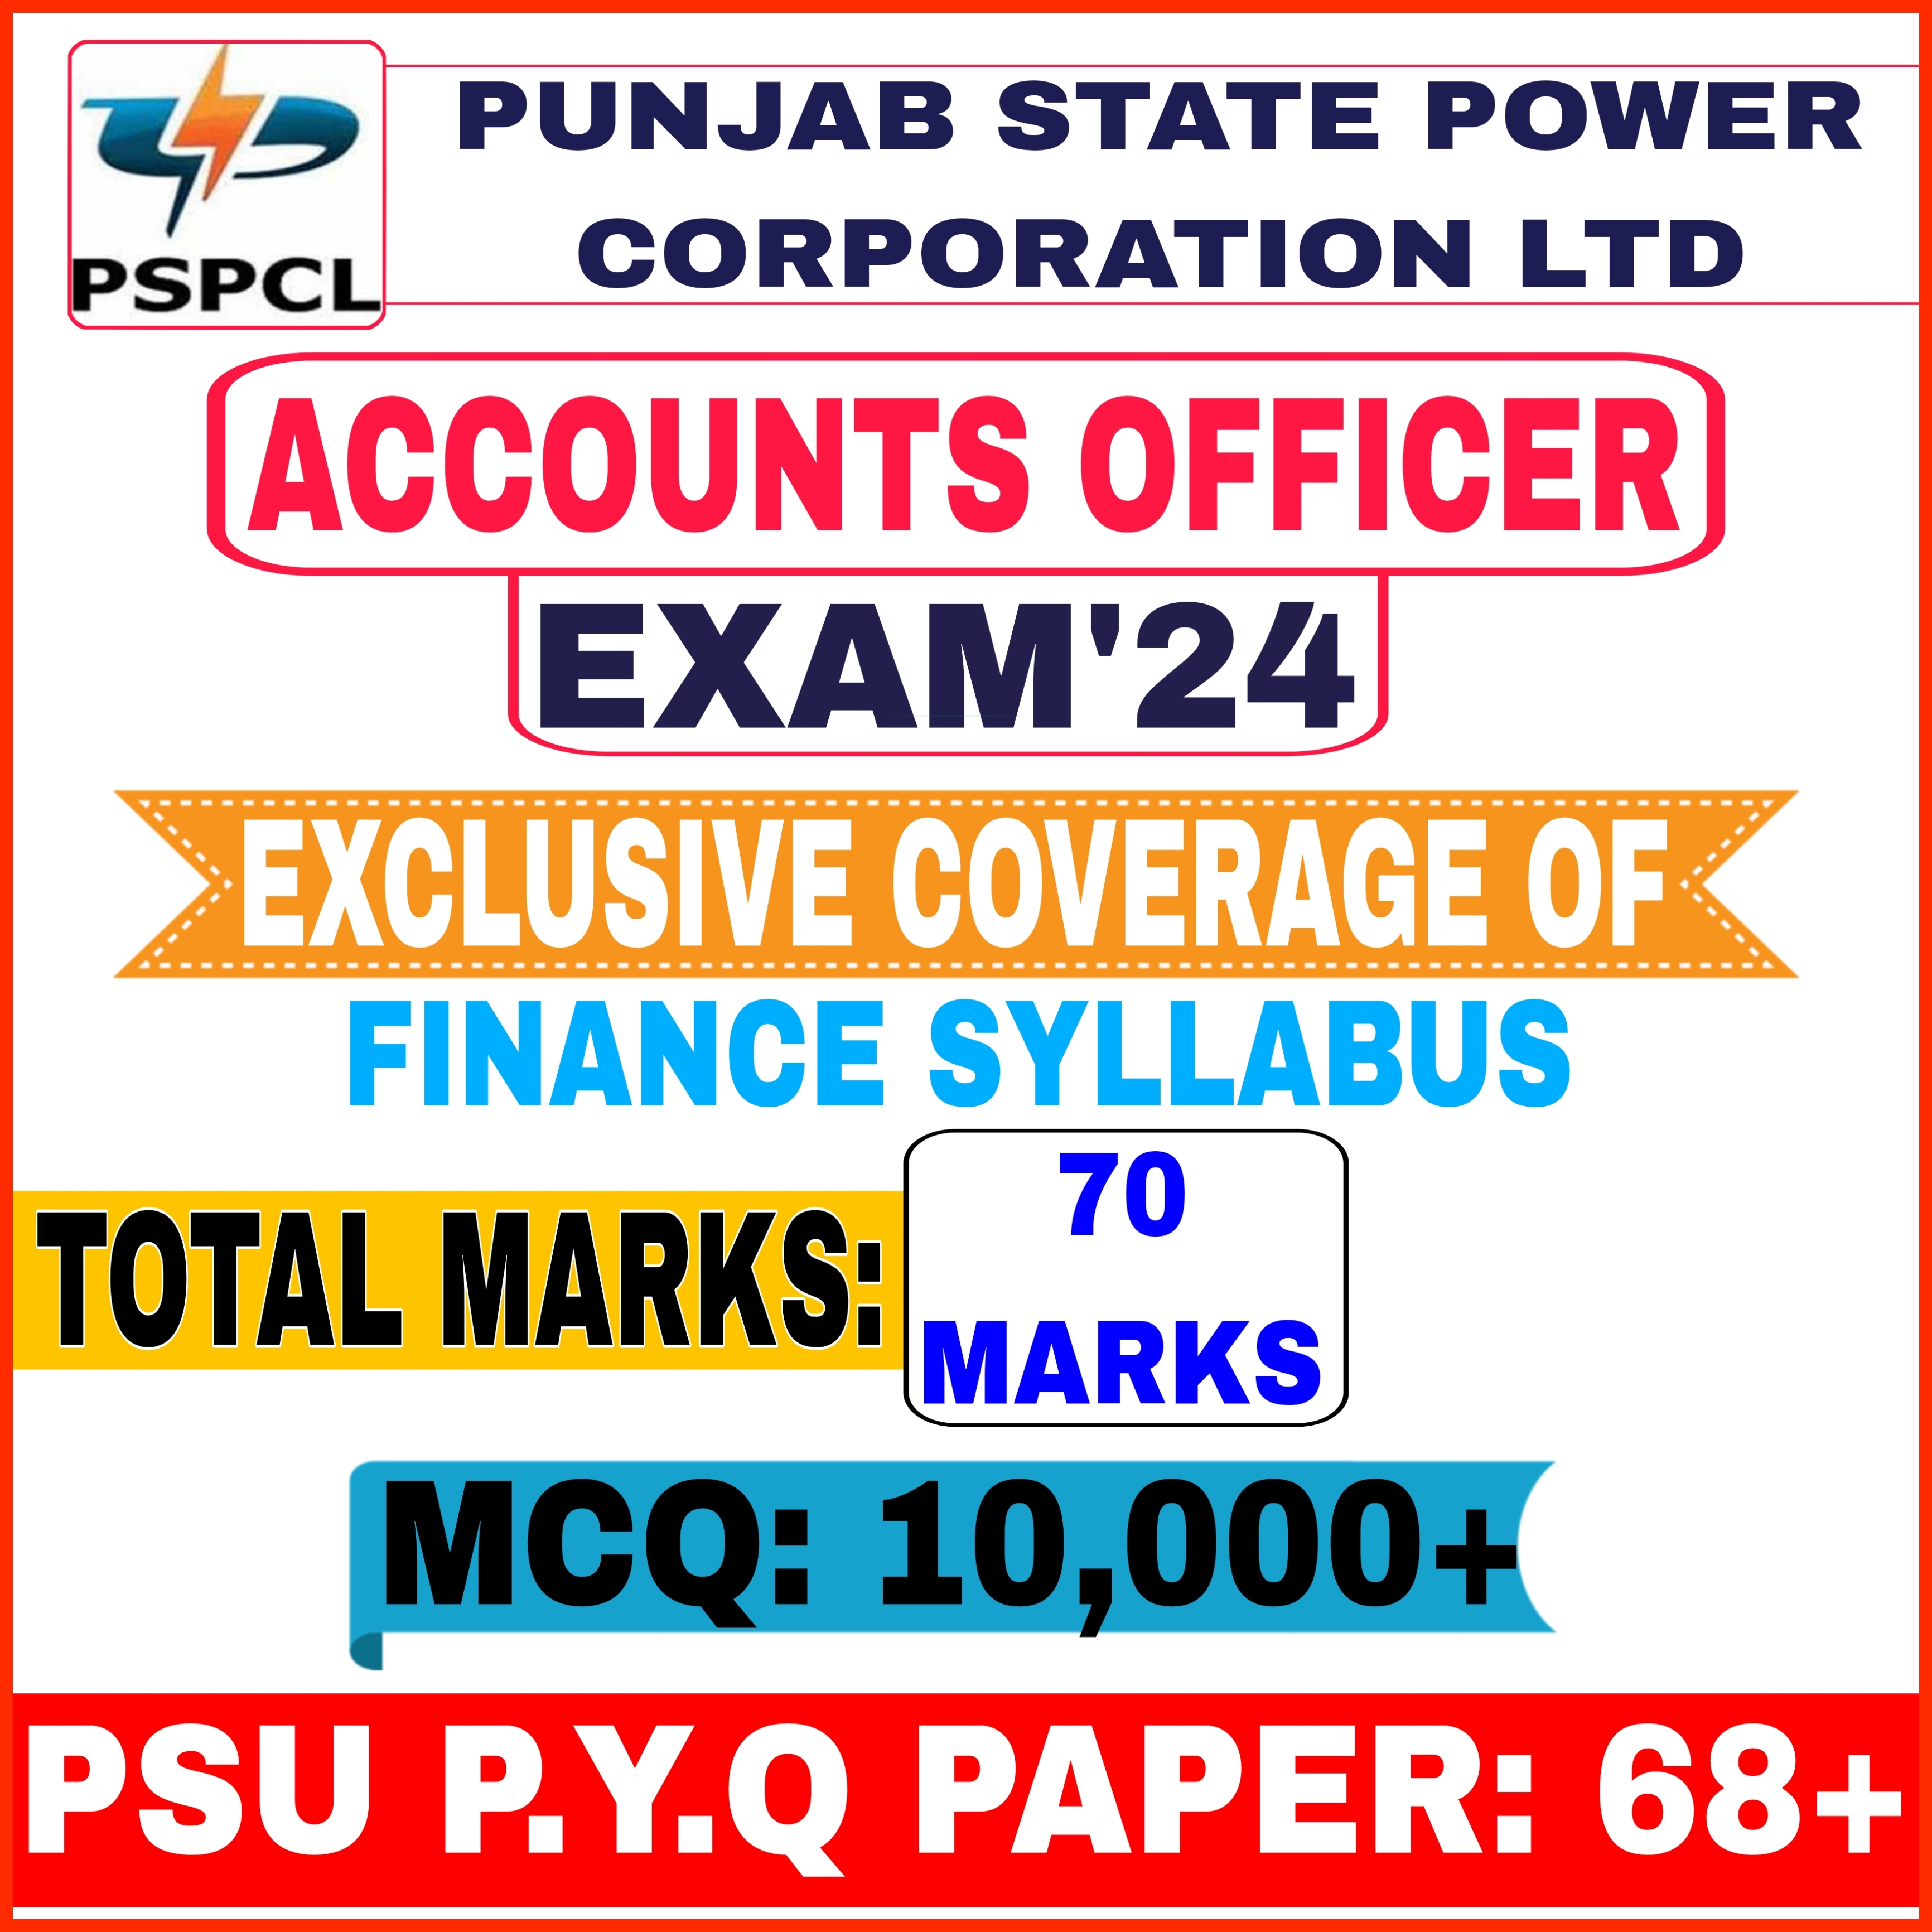 PSPCL (Punjab State Power Corporation Ltd) Accounts Officer Exam 2024